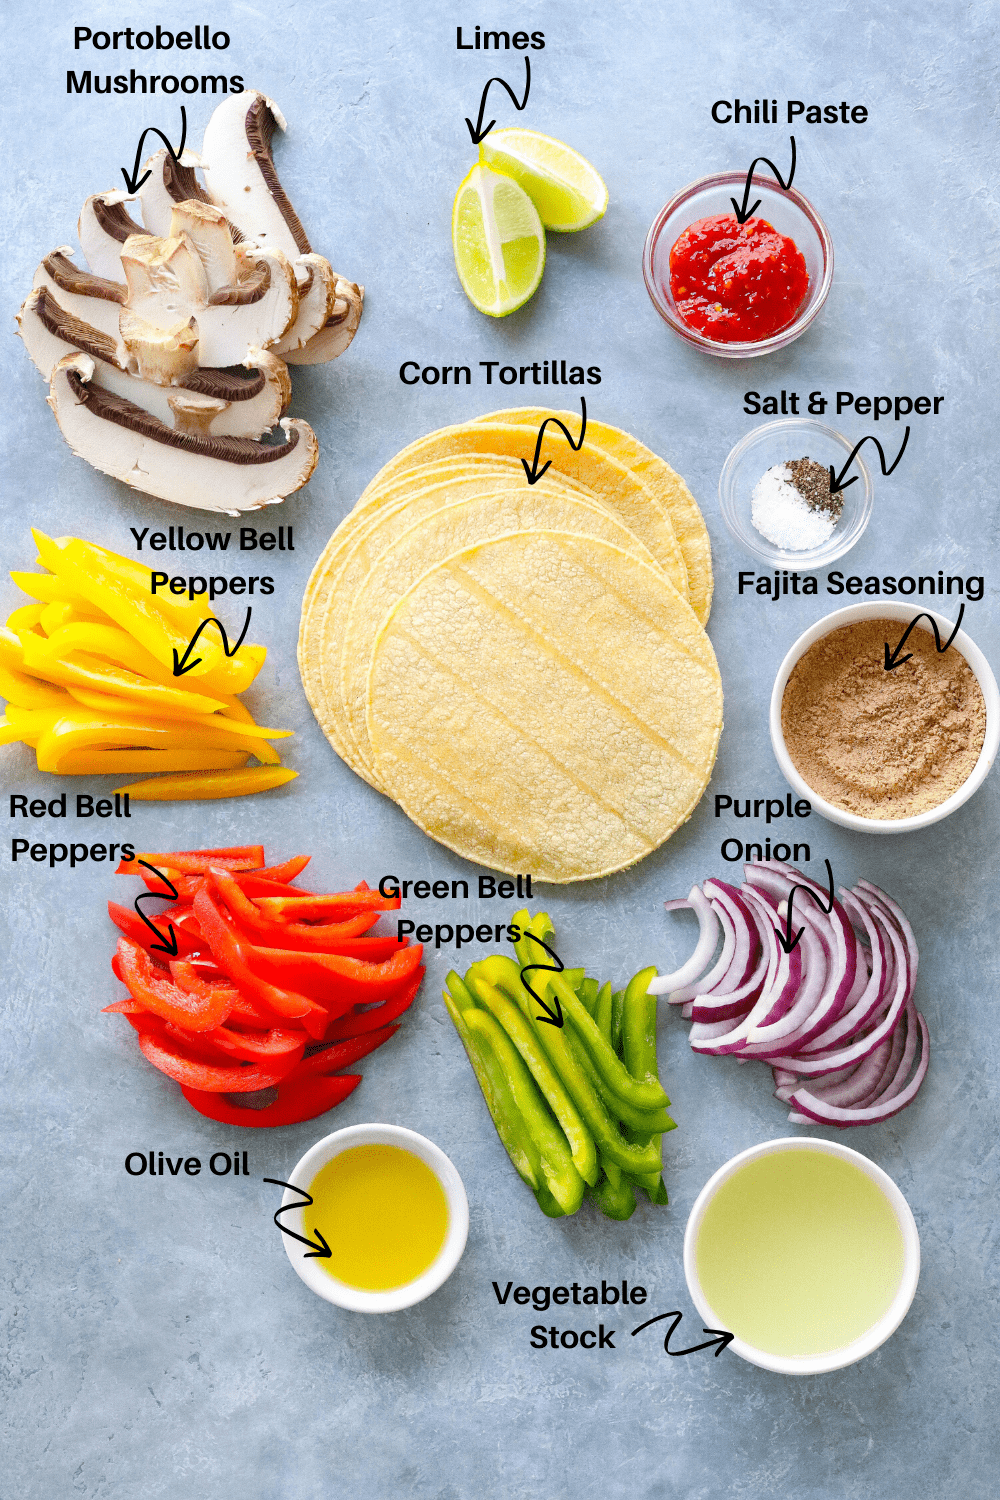 Vegetarian Fajita ingredients on a gray board including tortillas and mushrooms